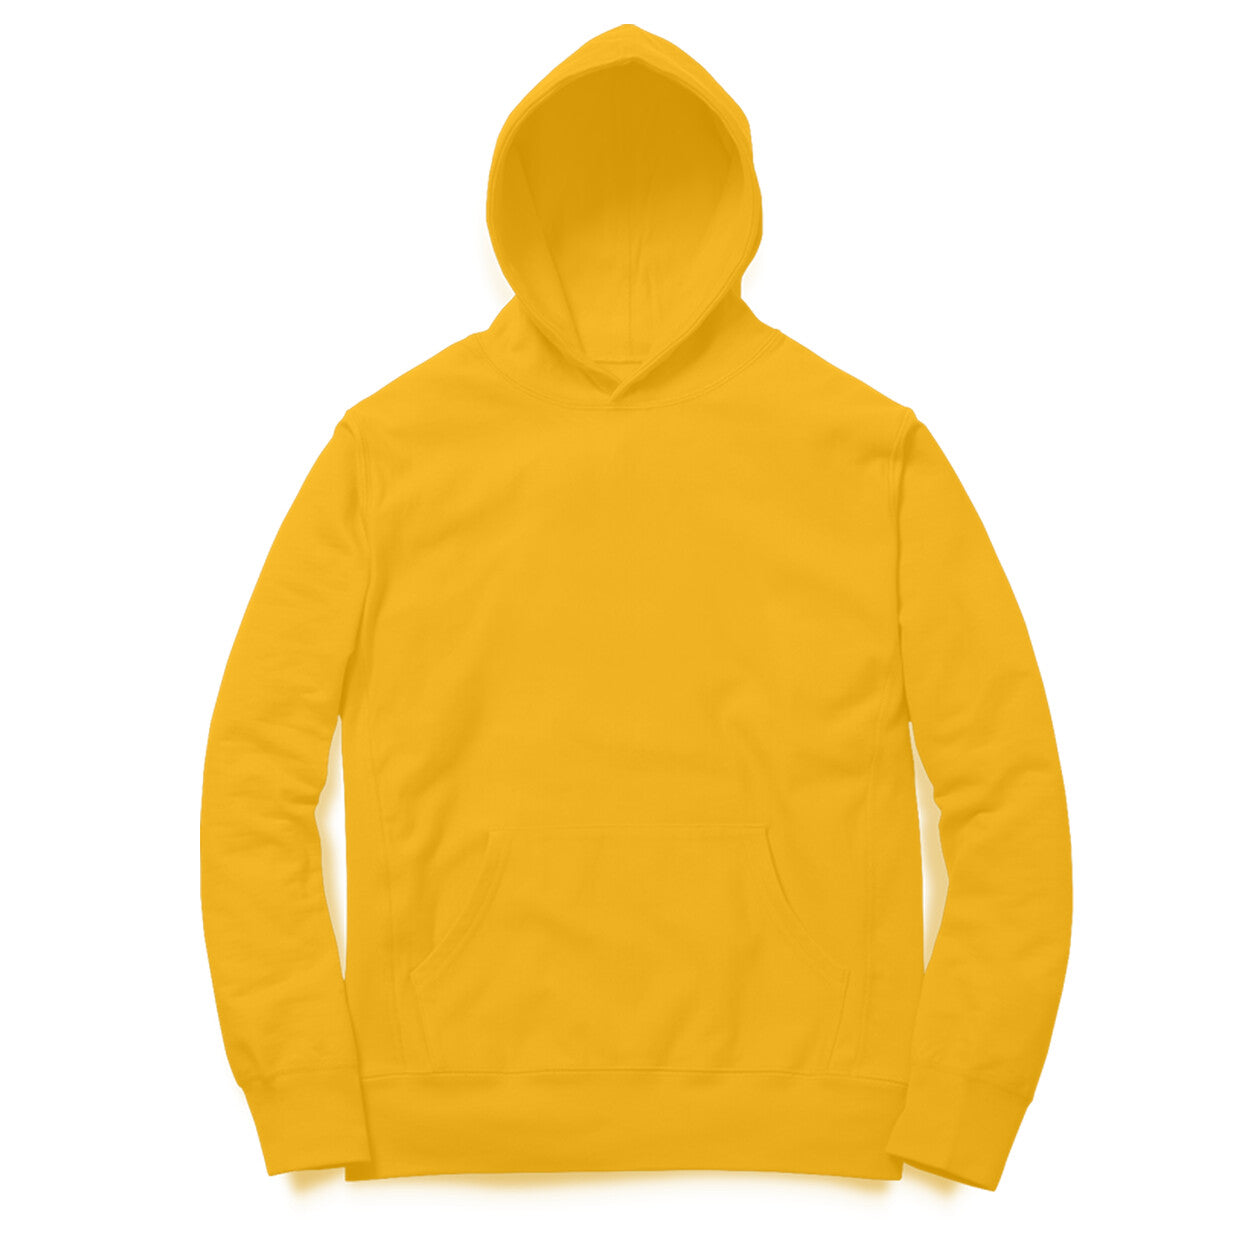 Unisex Golden Yellow Plain Hoodie